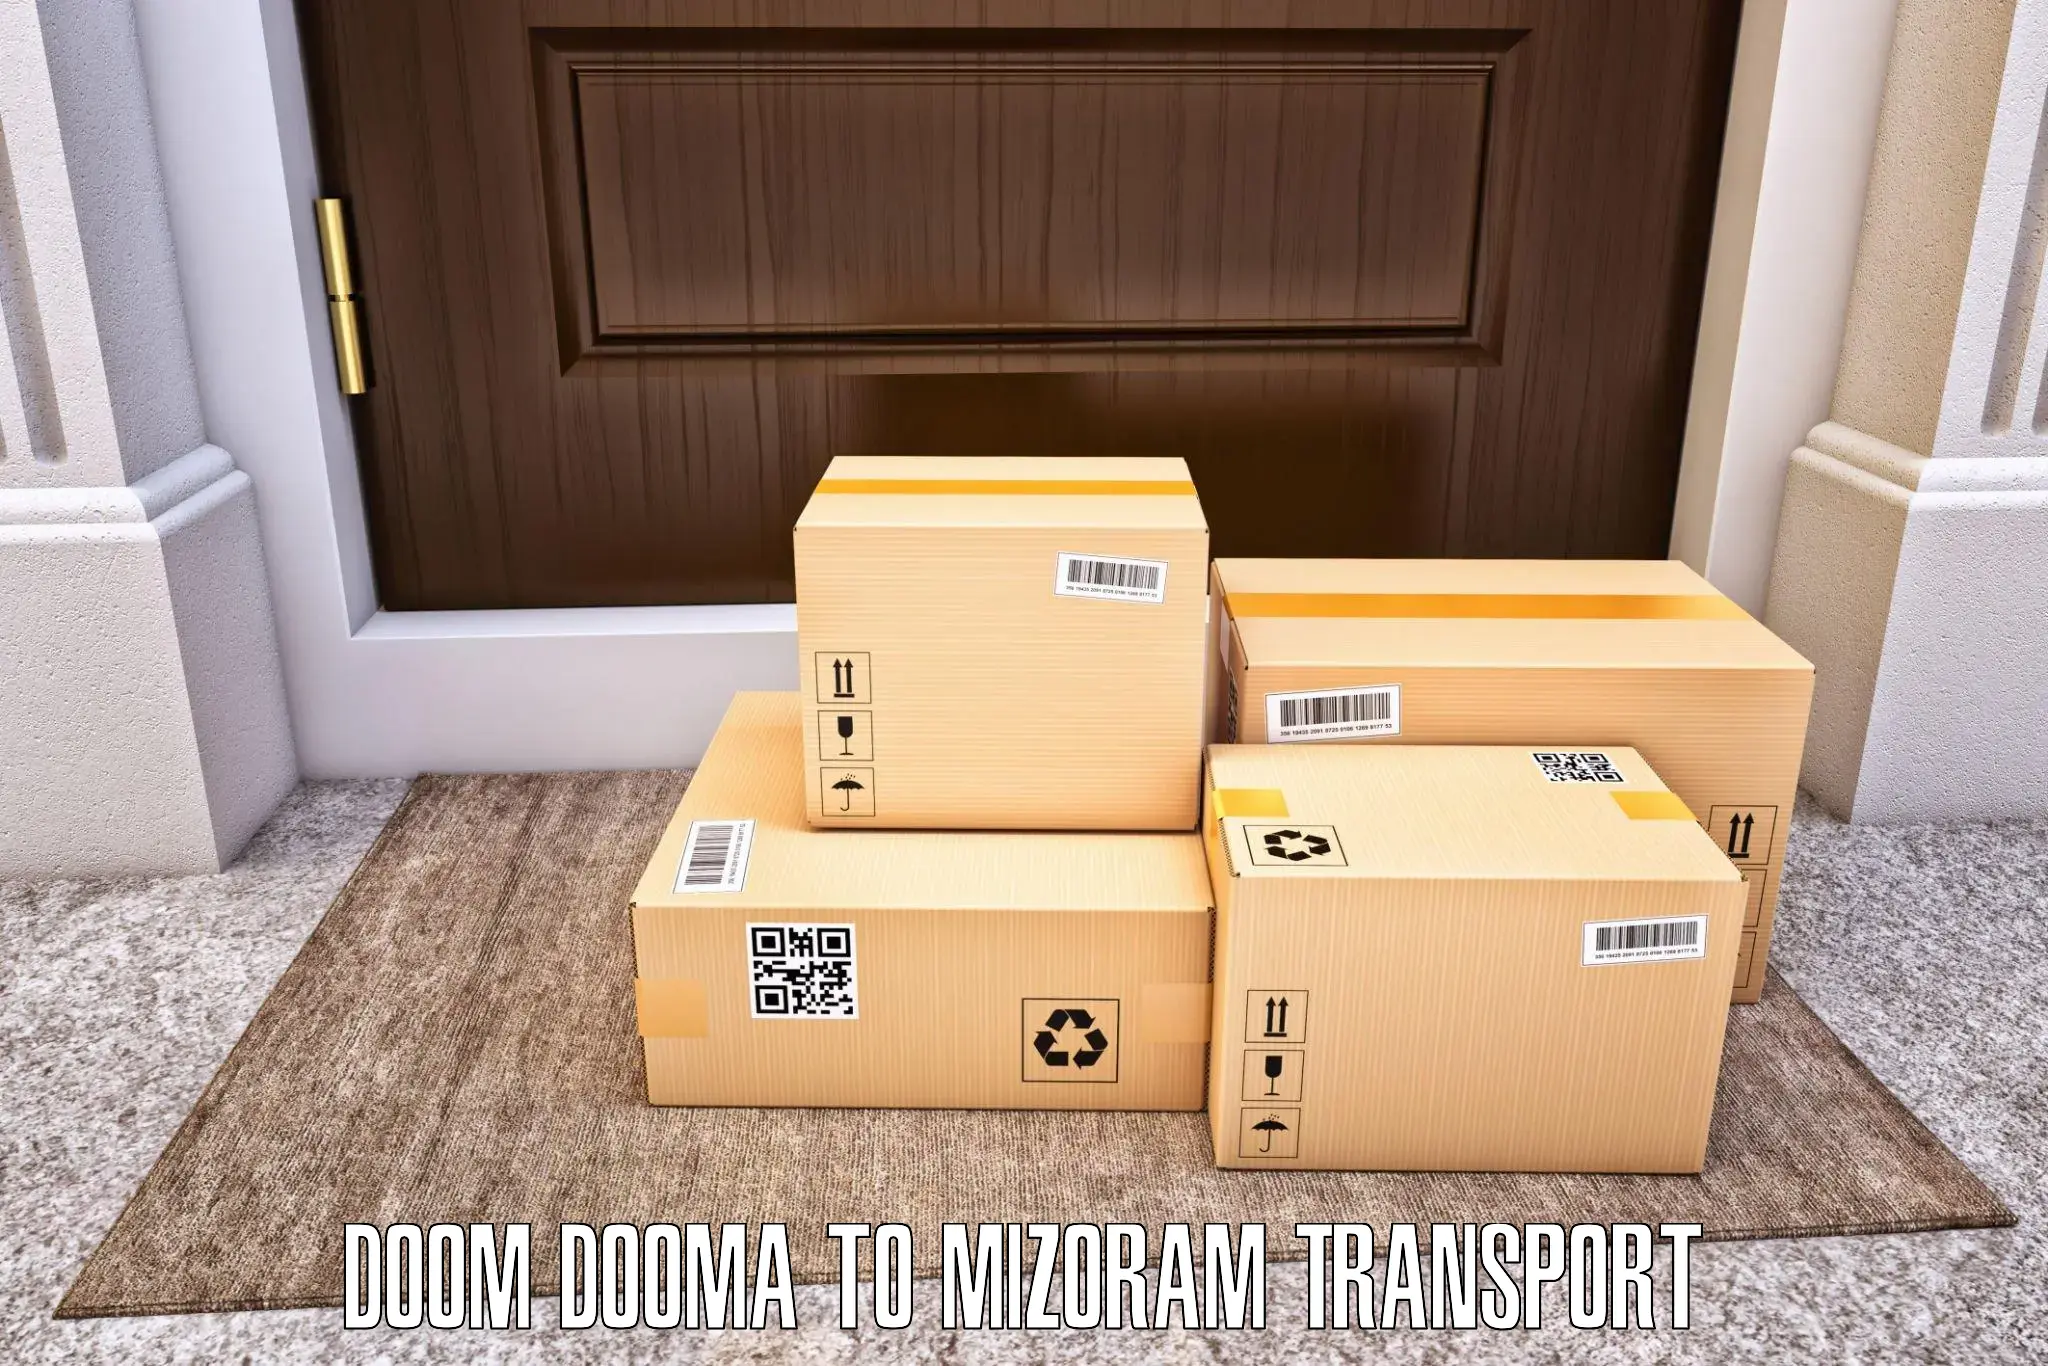 Delivery service Doom Dooma to Aizawl